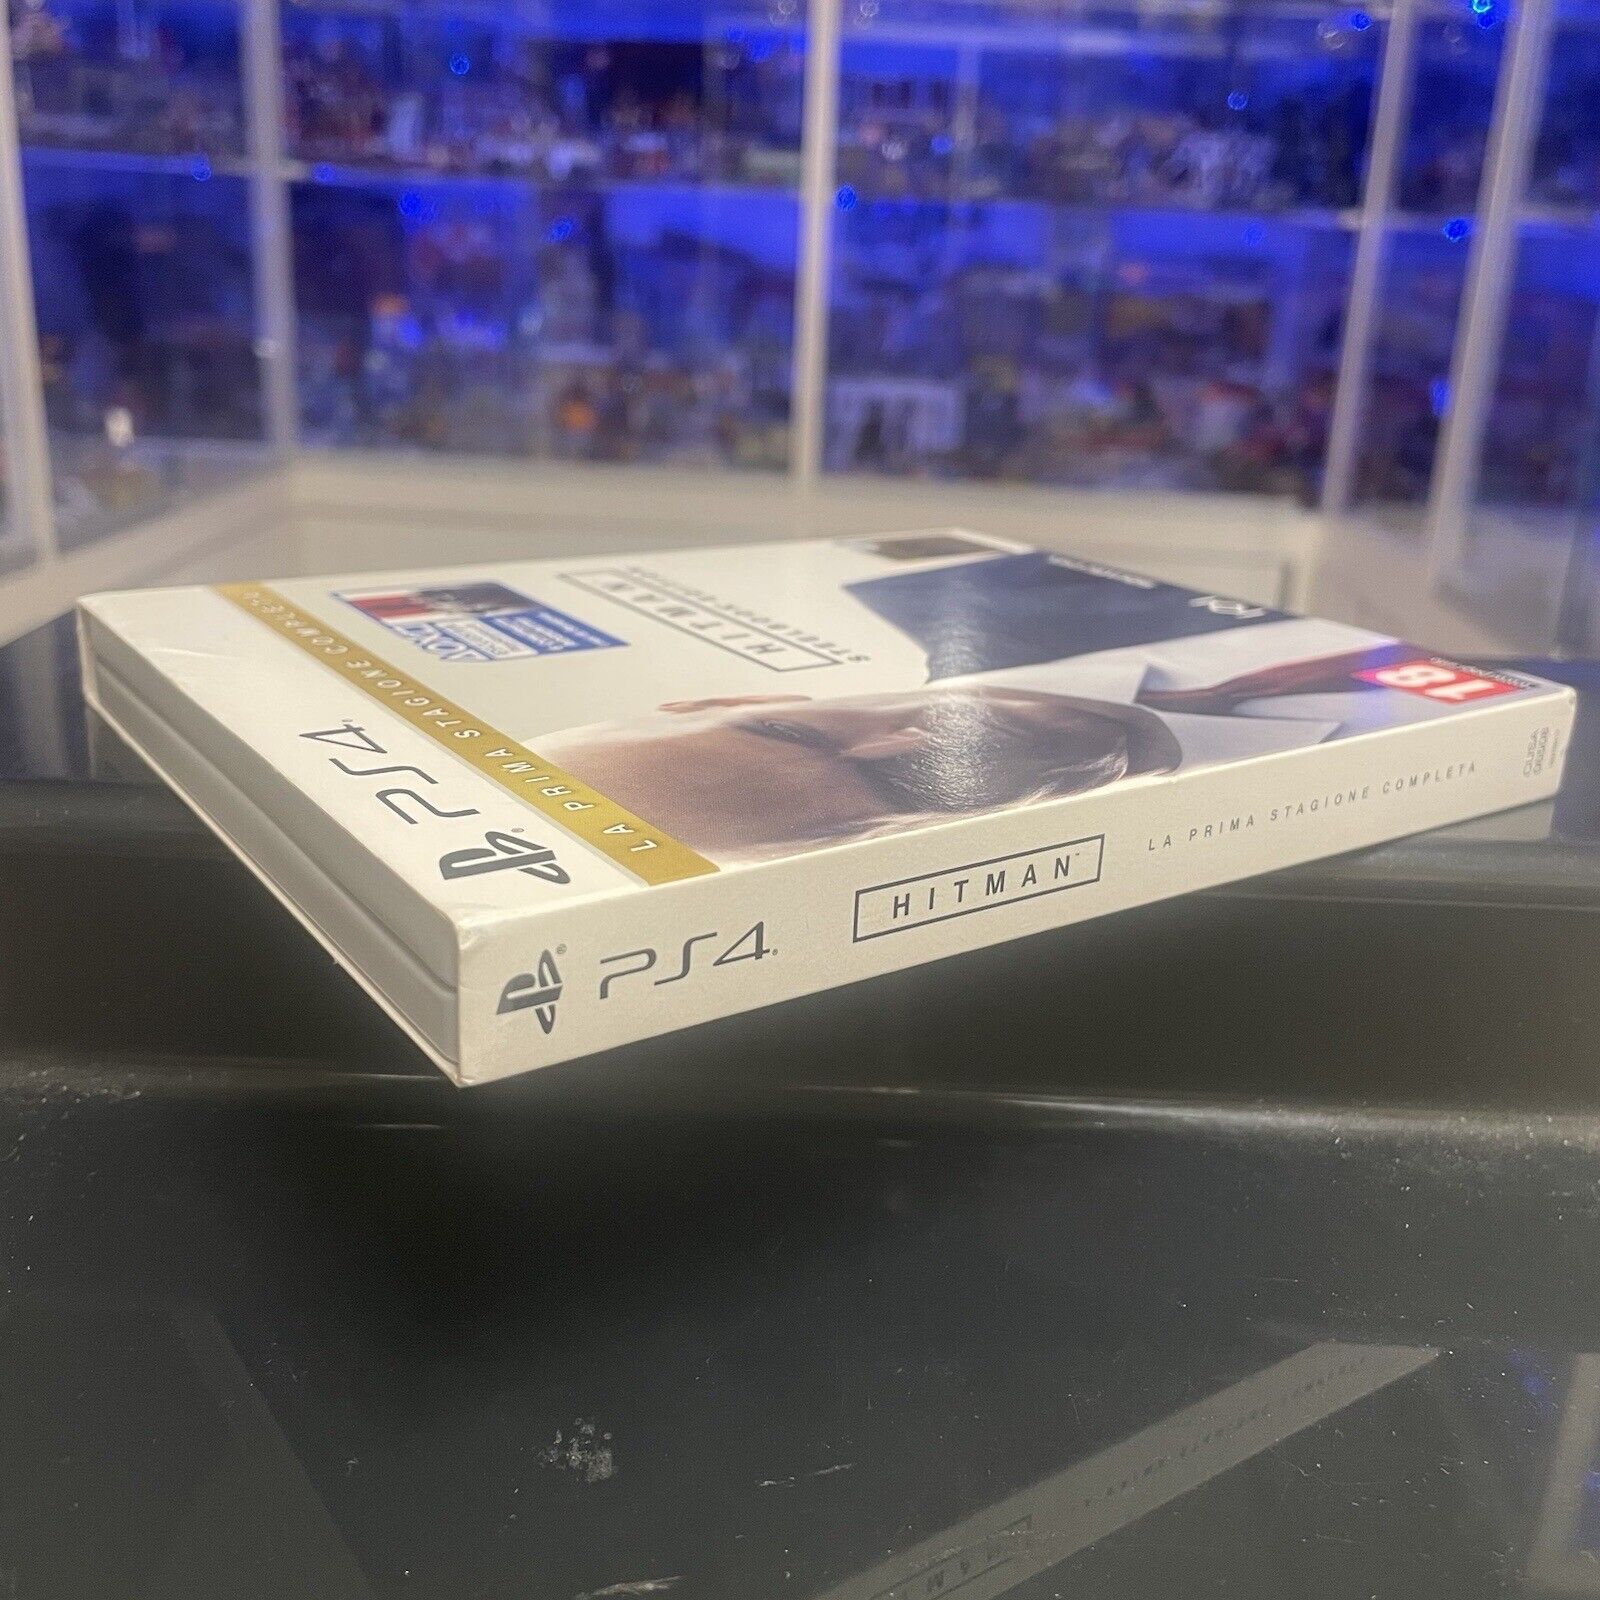 Ps4-Hitman-SteelBook-Edition-Sony-Playstation-Pal-ita-145362130778-4